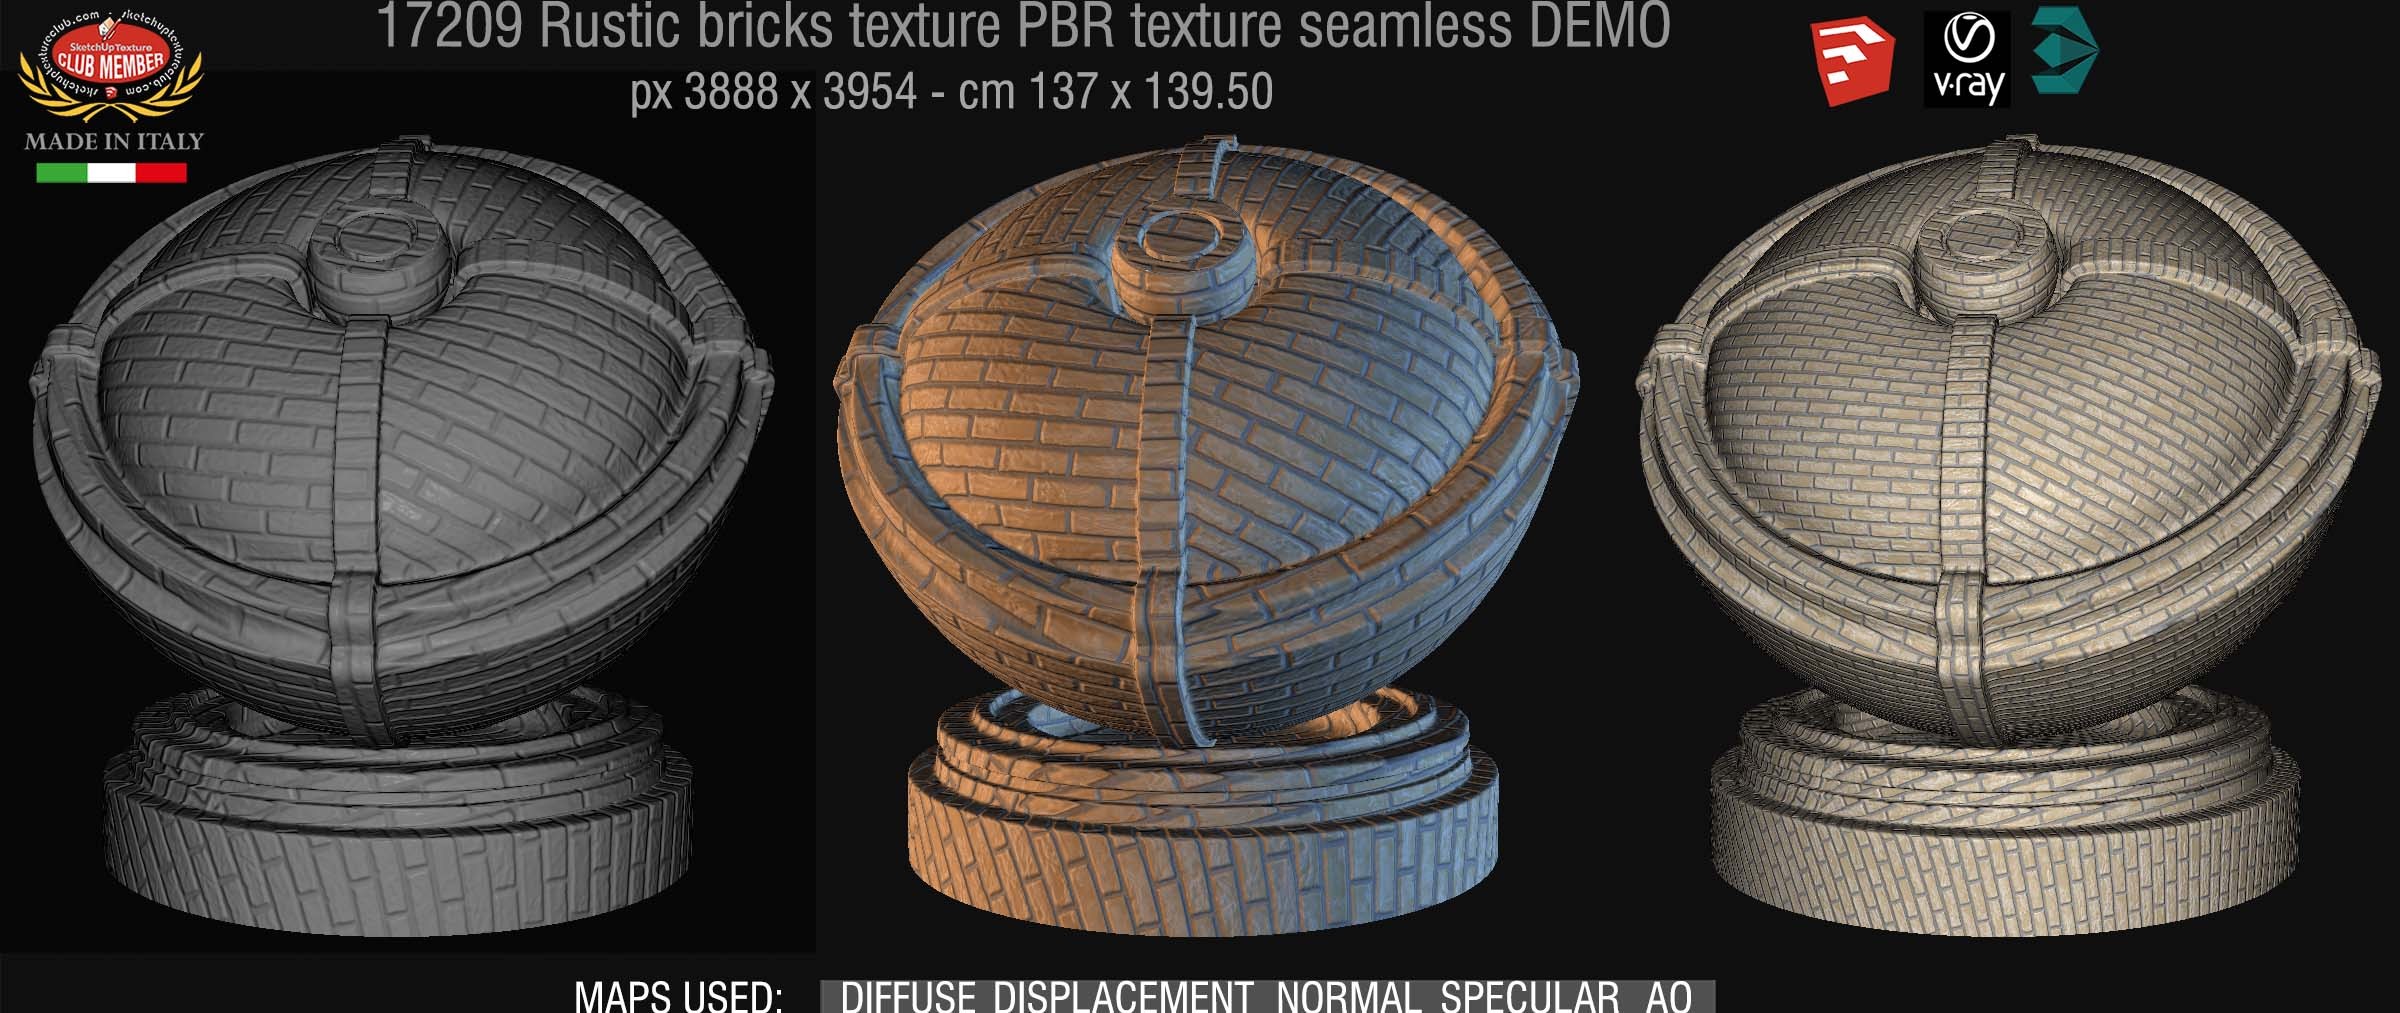 17209 Rustic bricks PBR texture seamless DEMO